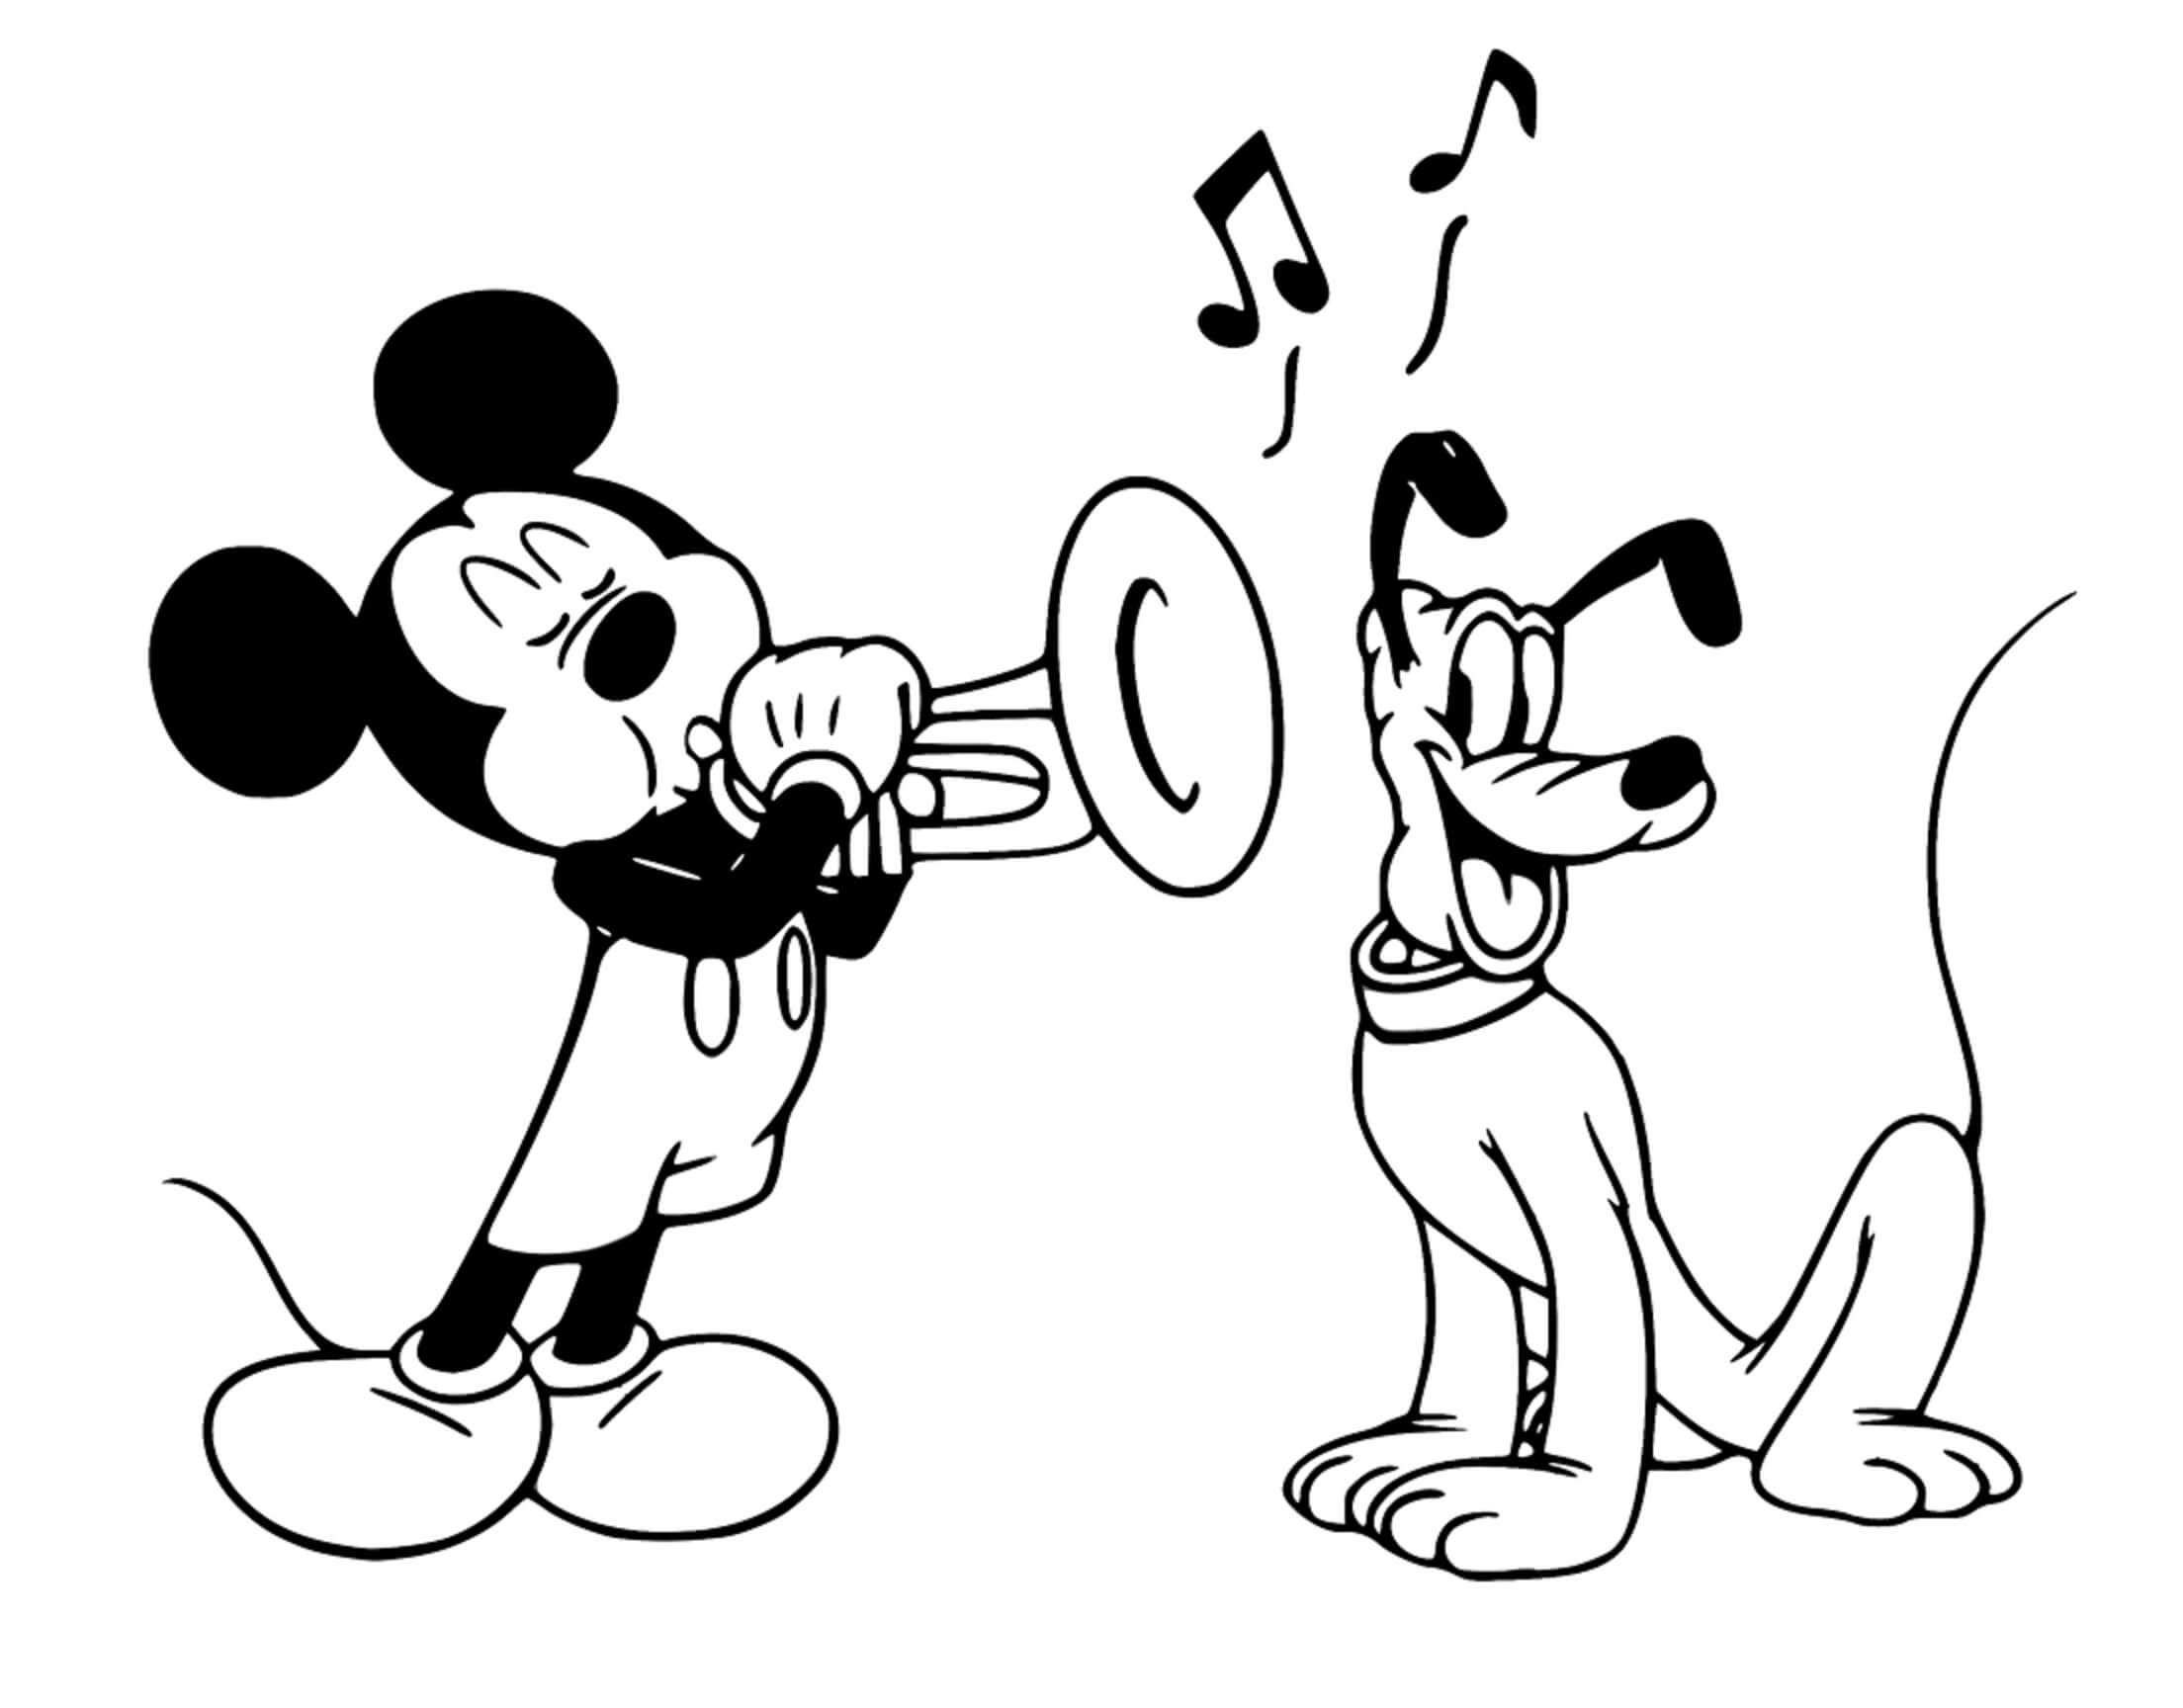 Mickey Joue de La Trompette coloring page